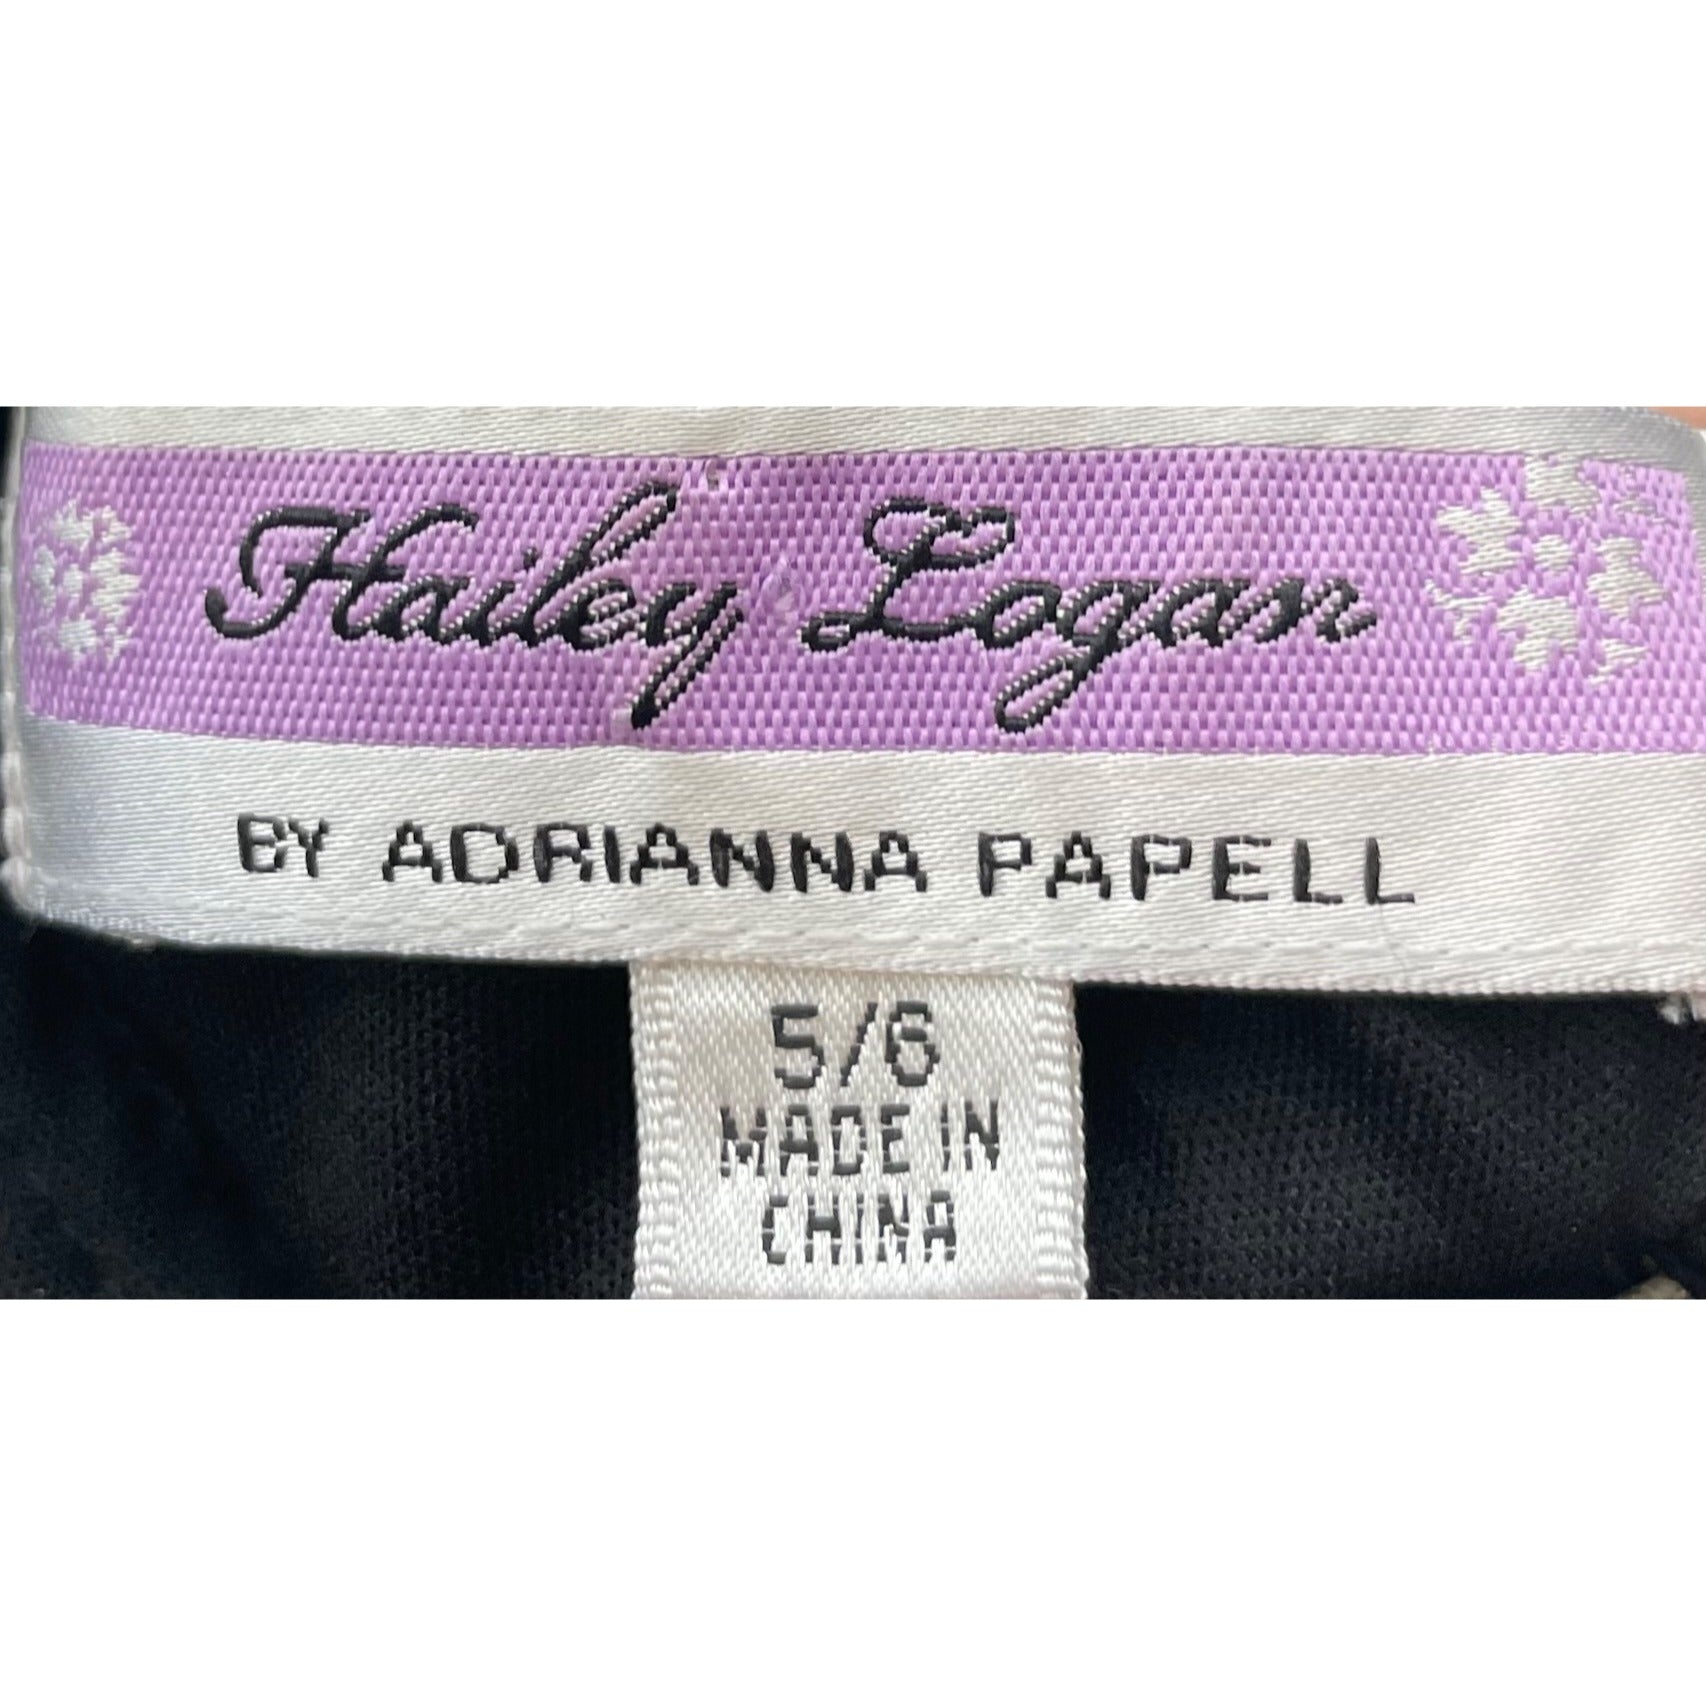 Adrianna Papell X Hailey Logan Women's Size 5/6 Black Satin Cocktail Dress